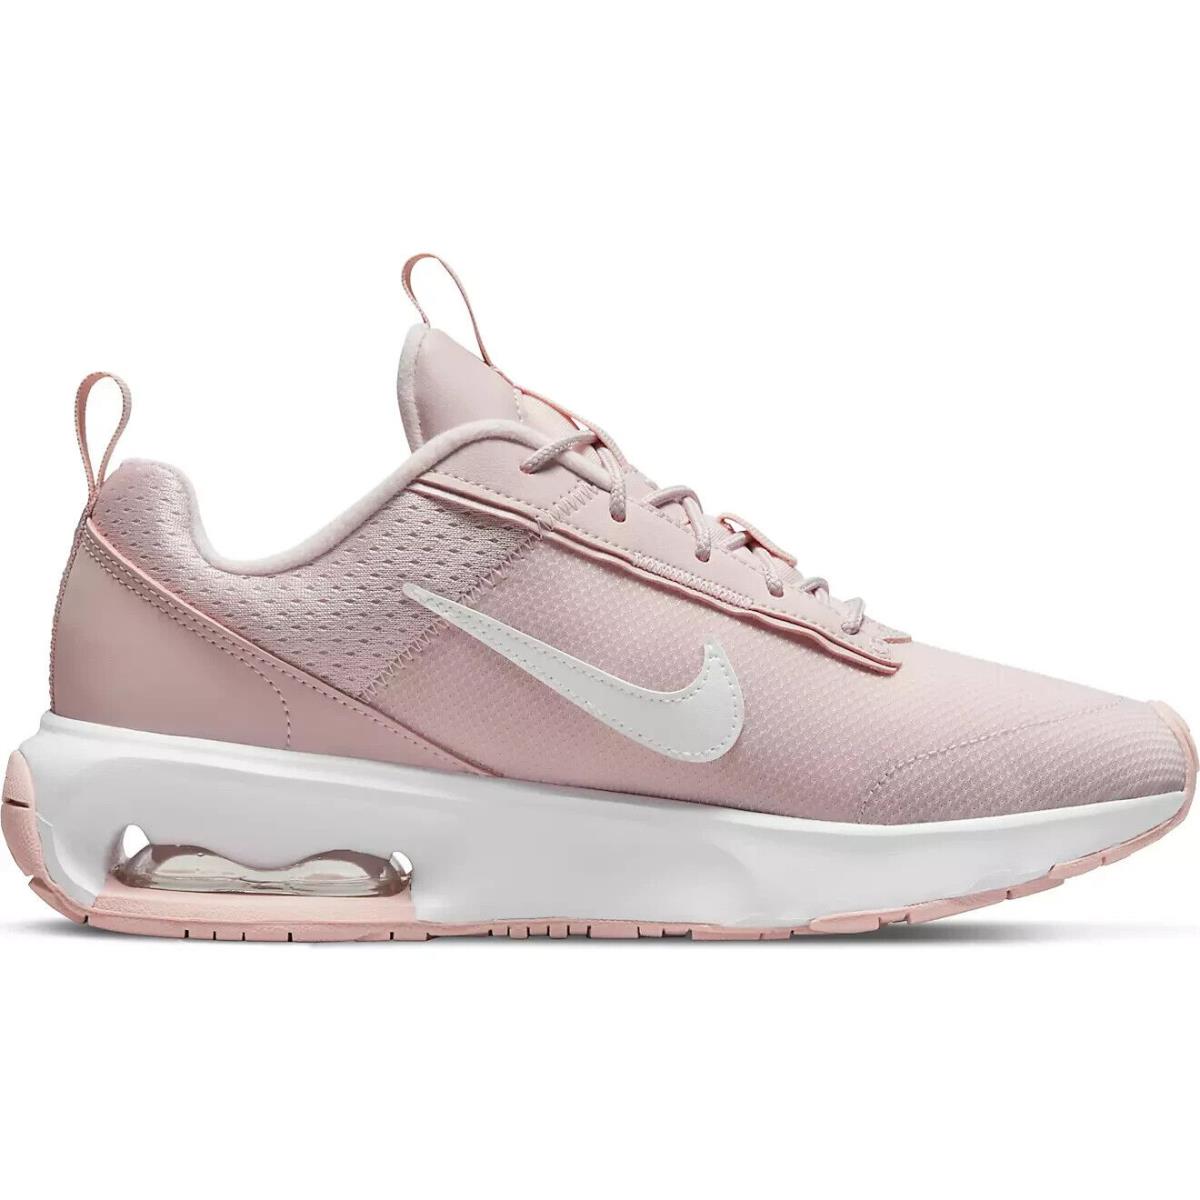 Womens 11 Nike Air Max Interlock Lite Barely Rose White Run Shoes DV5695-600 - Pink